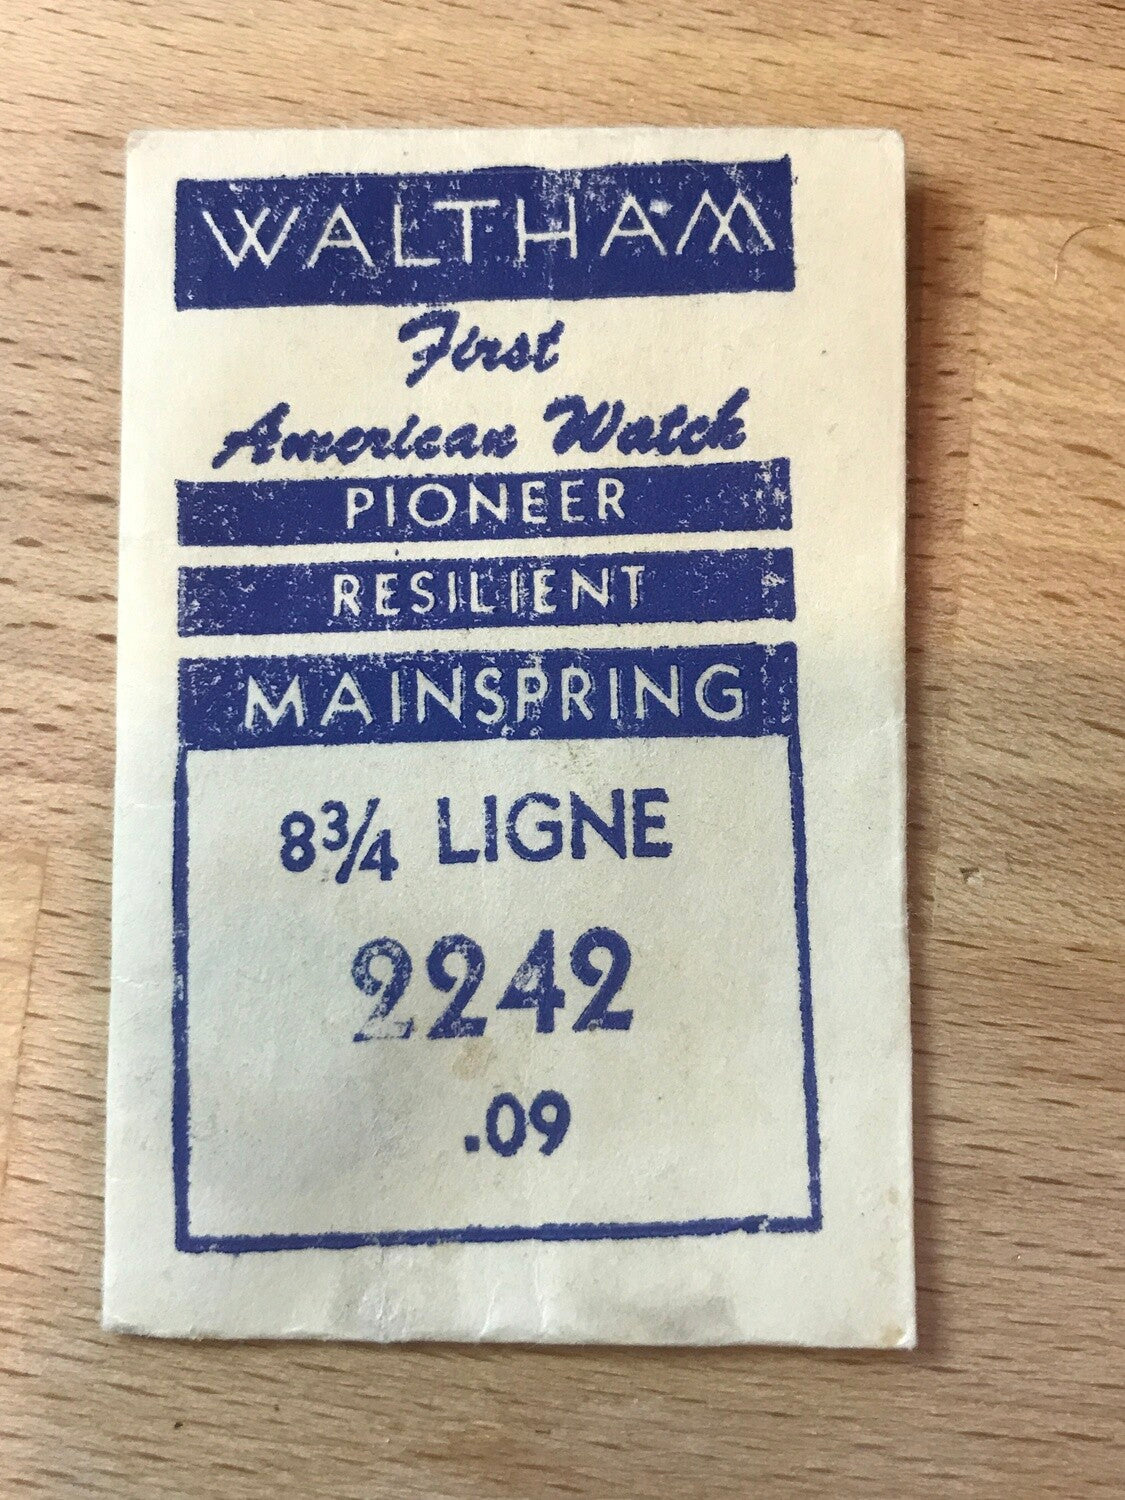 Waltham Factory Mainspring for 8¾  ligne No. 2242 - Steel